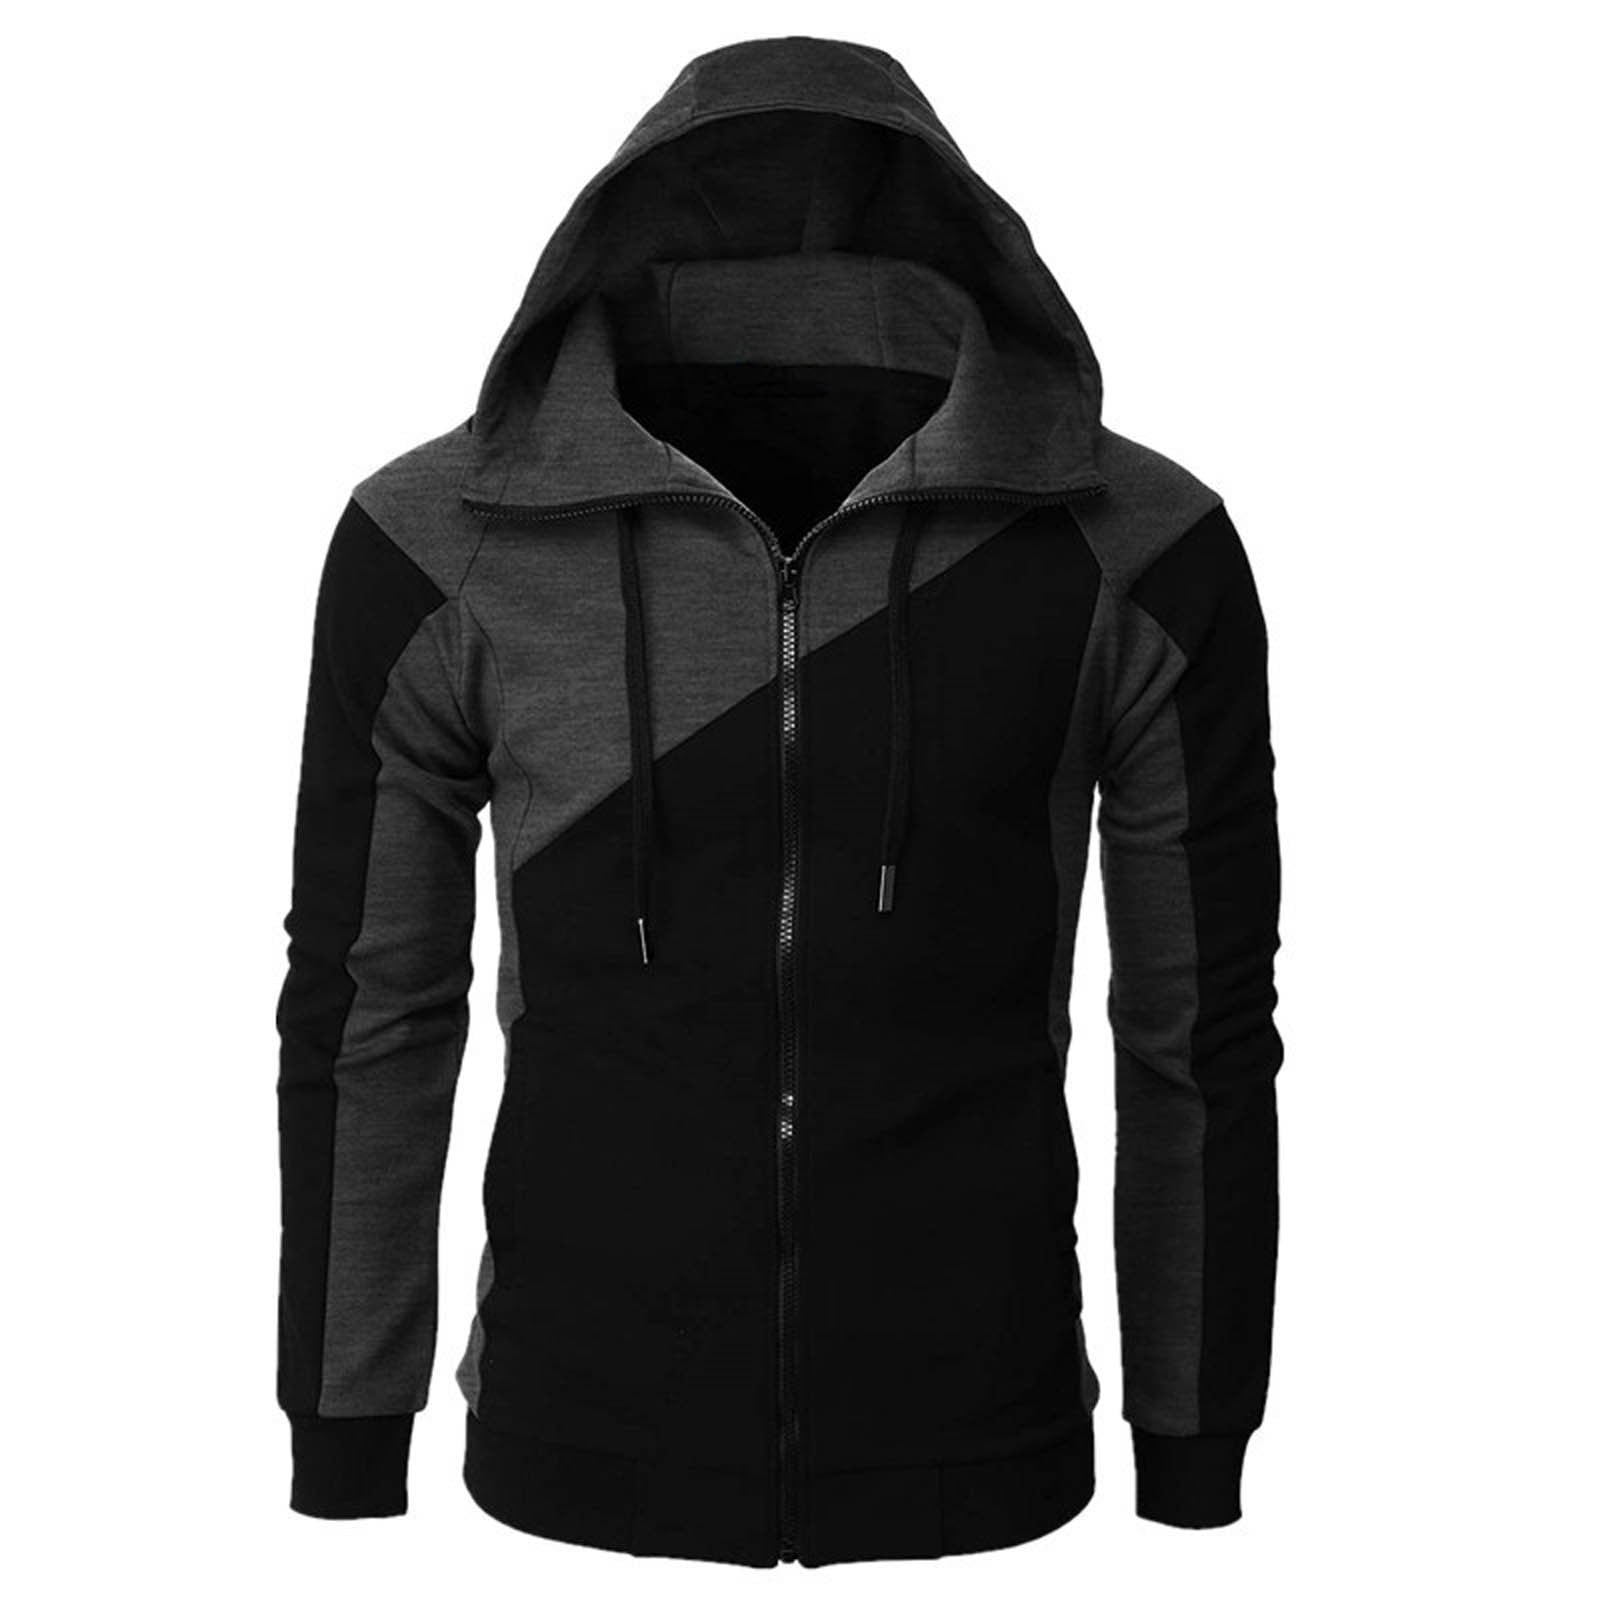 Hfyihgf Men's Jacket Color Block Full Zip Hoodie Long Sleeve Slim Fit  Lightweight Gym Sports Hooded Sweatshirt Coat with Pocket(Black,XL)